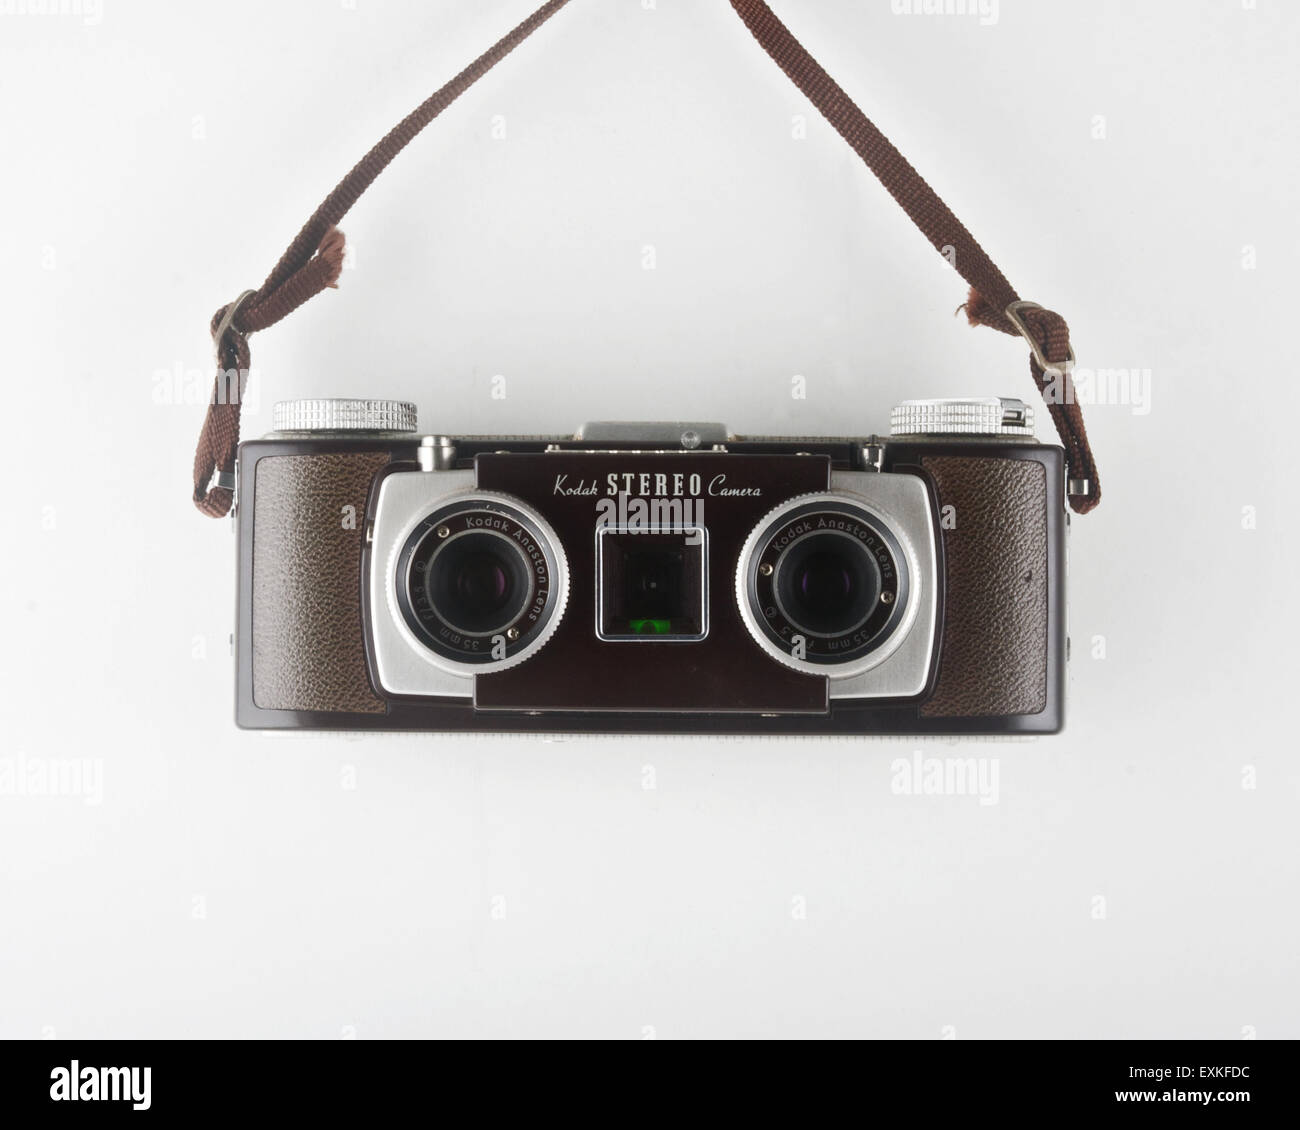 Vintage Kodak Stereo camera Stock Photo - Alamy